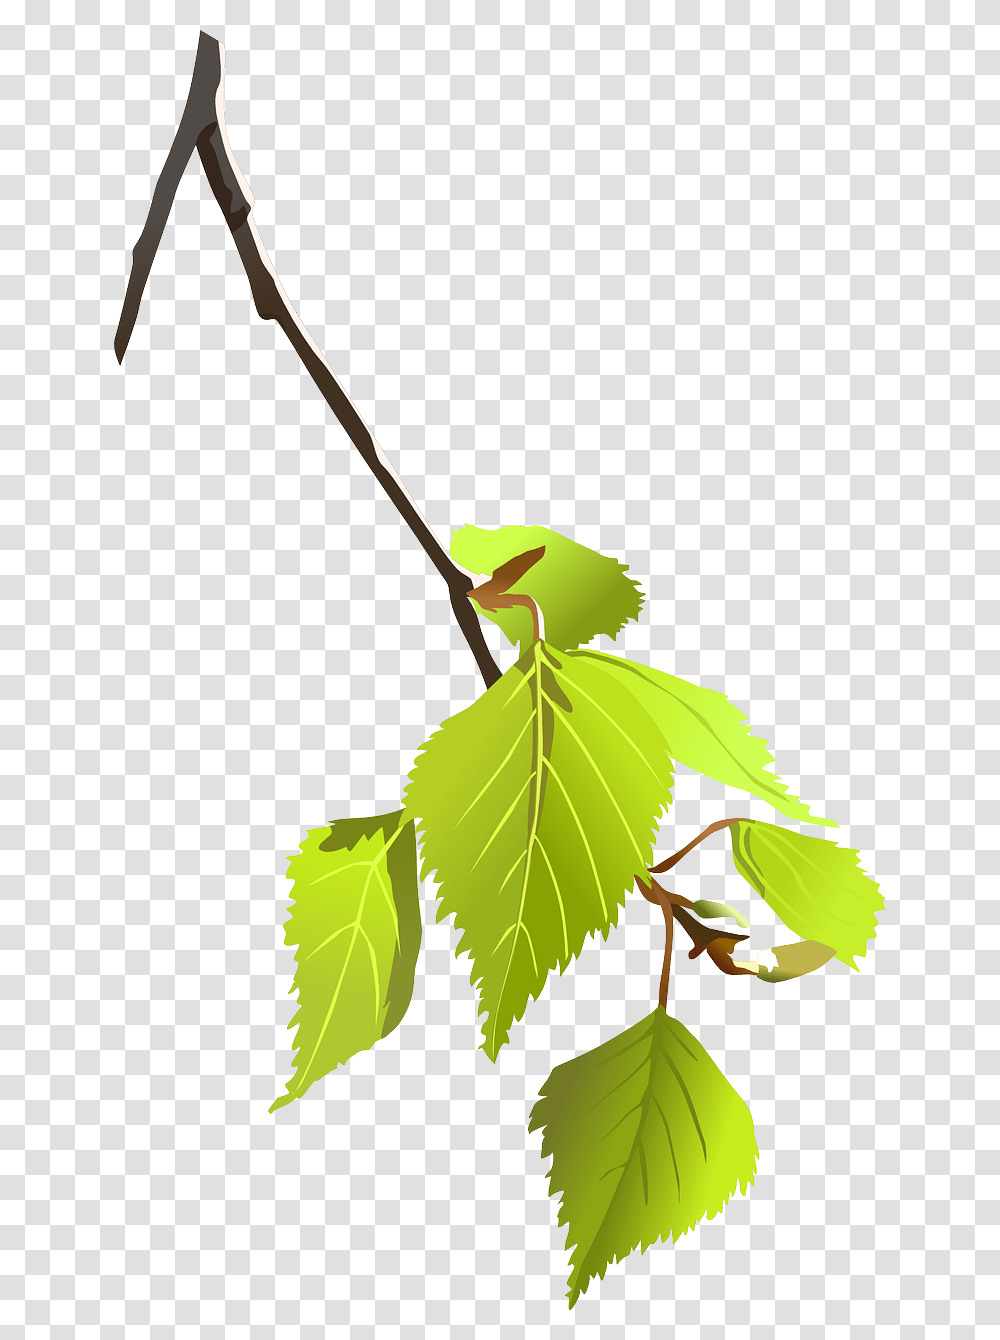 Tree Branch Clip Art Vector Clip Art Online Small Tree Branch, Leaf, Plant, Green, Vine Transparent Png